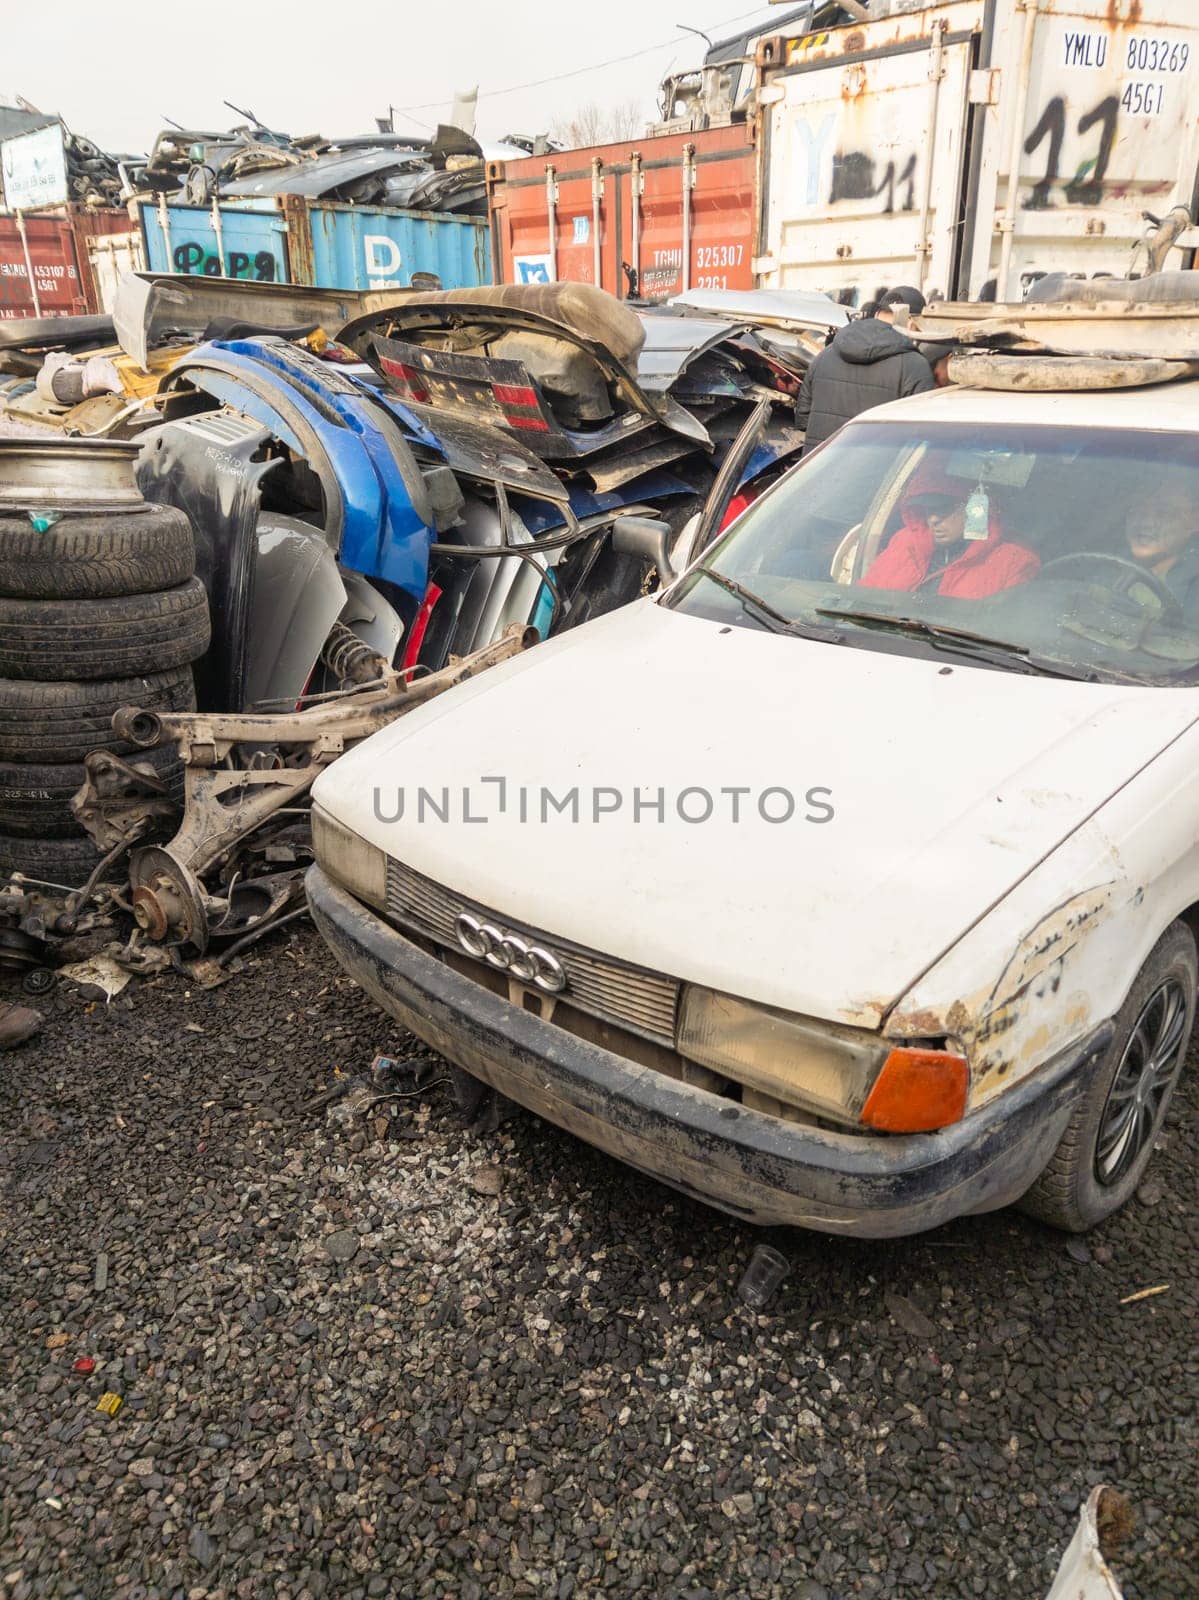 two sellers sitting inside junk Audi car in a junkyard used car parts market by z1b